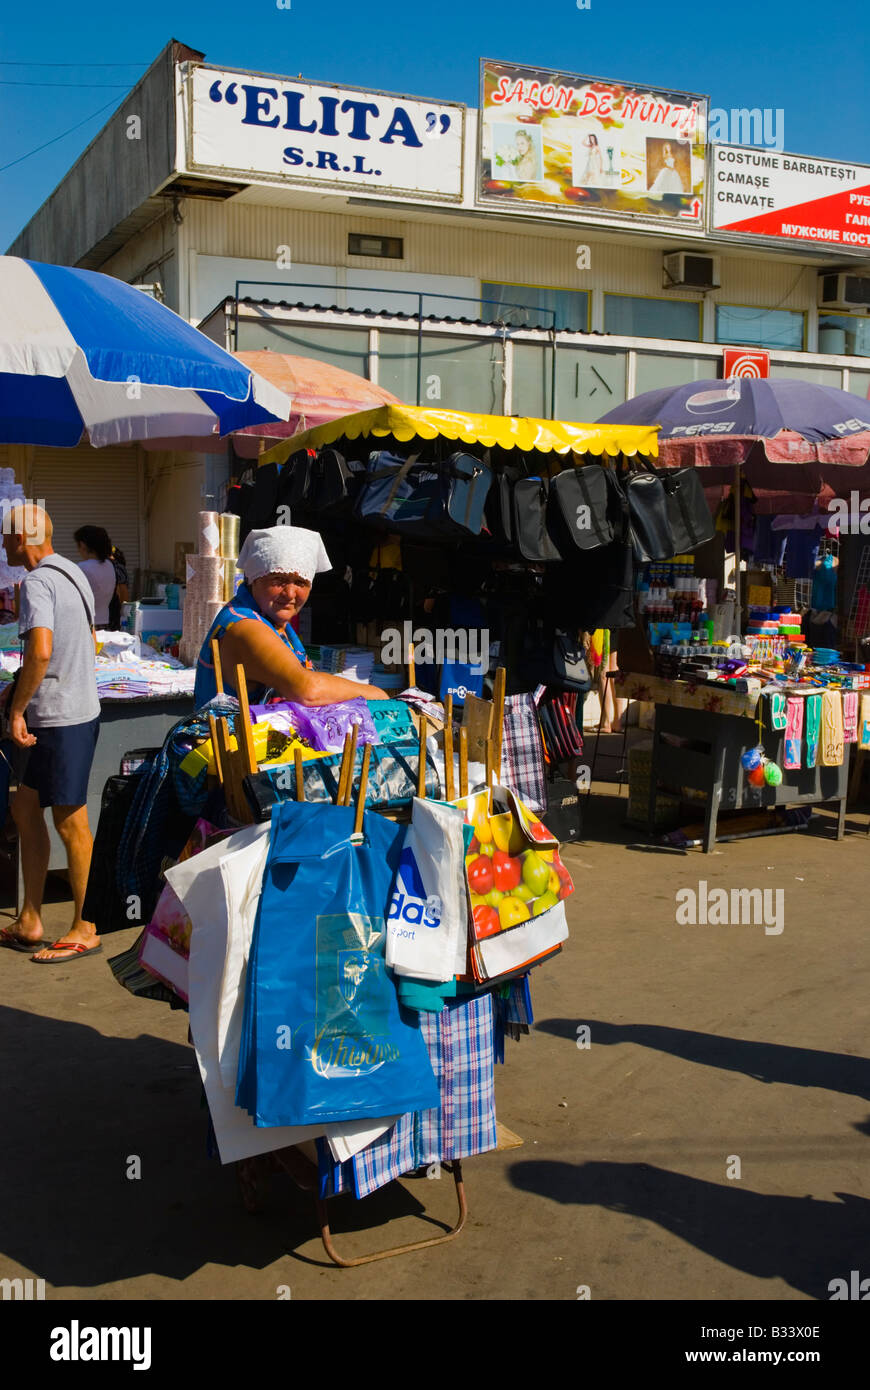 Female bag vendor at Piata Centrala marketplace in Chisinau Moldova Europe  Stock Photo - Alamy